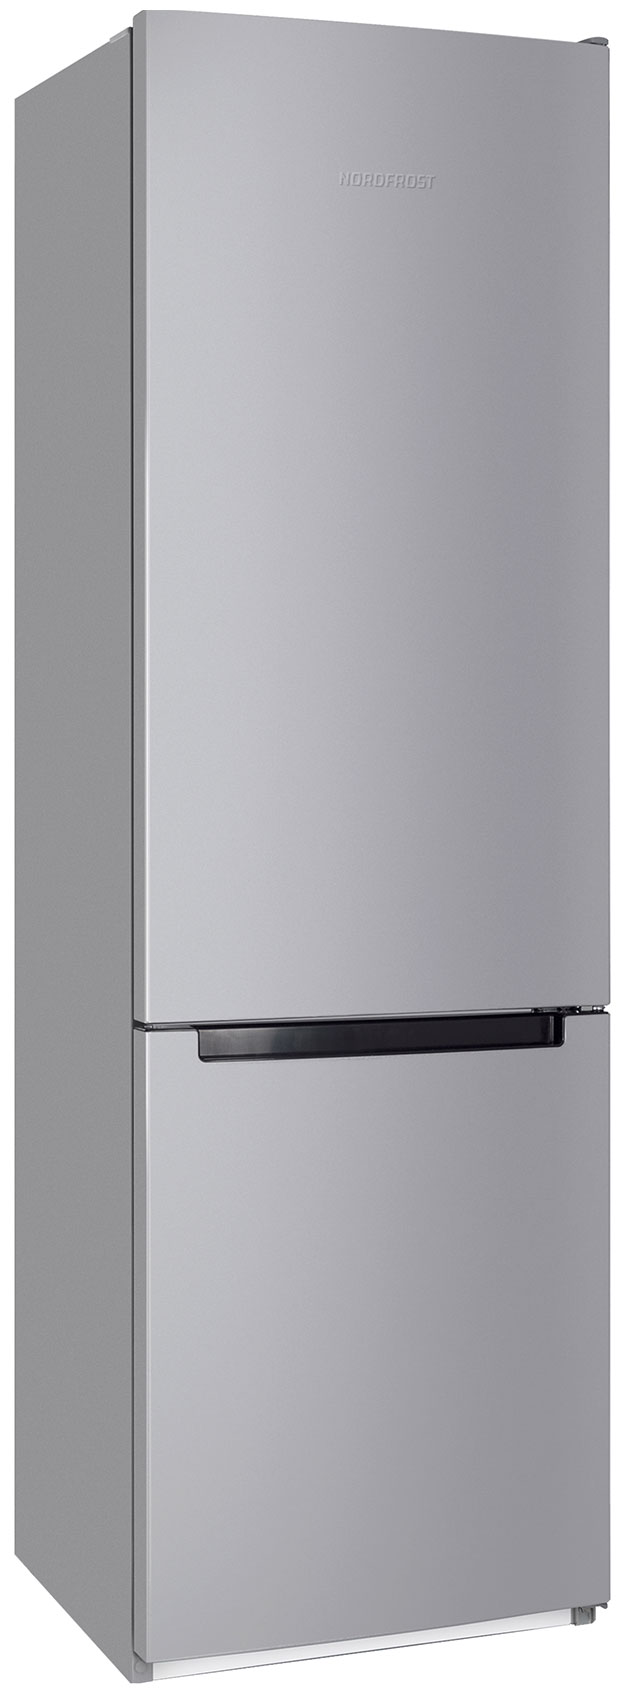 Холодильник NordFrost NRB 134 S серебристый двухкамерный холодильник liebherr cuel 2831 22 001 серебристый